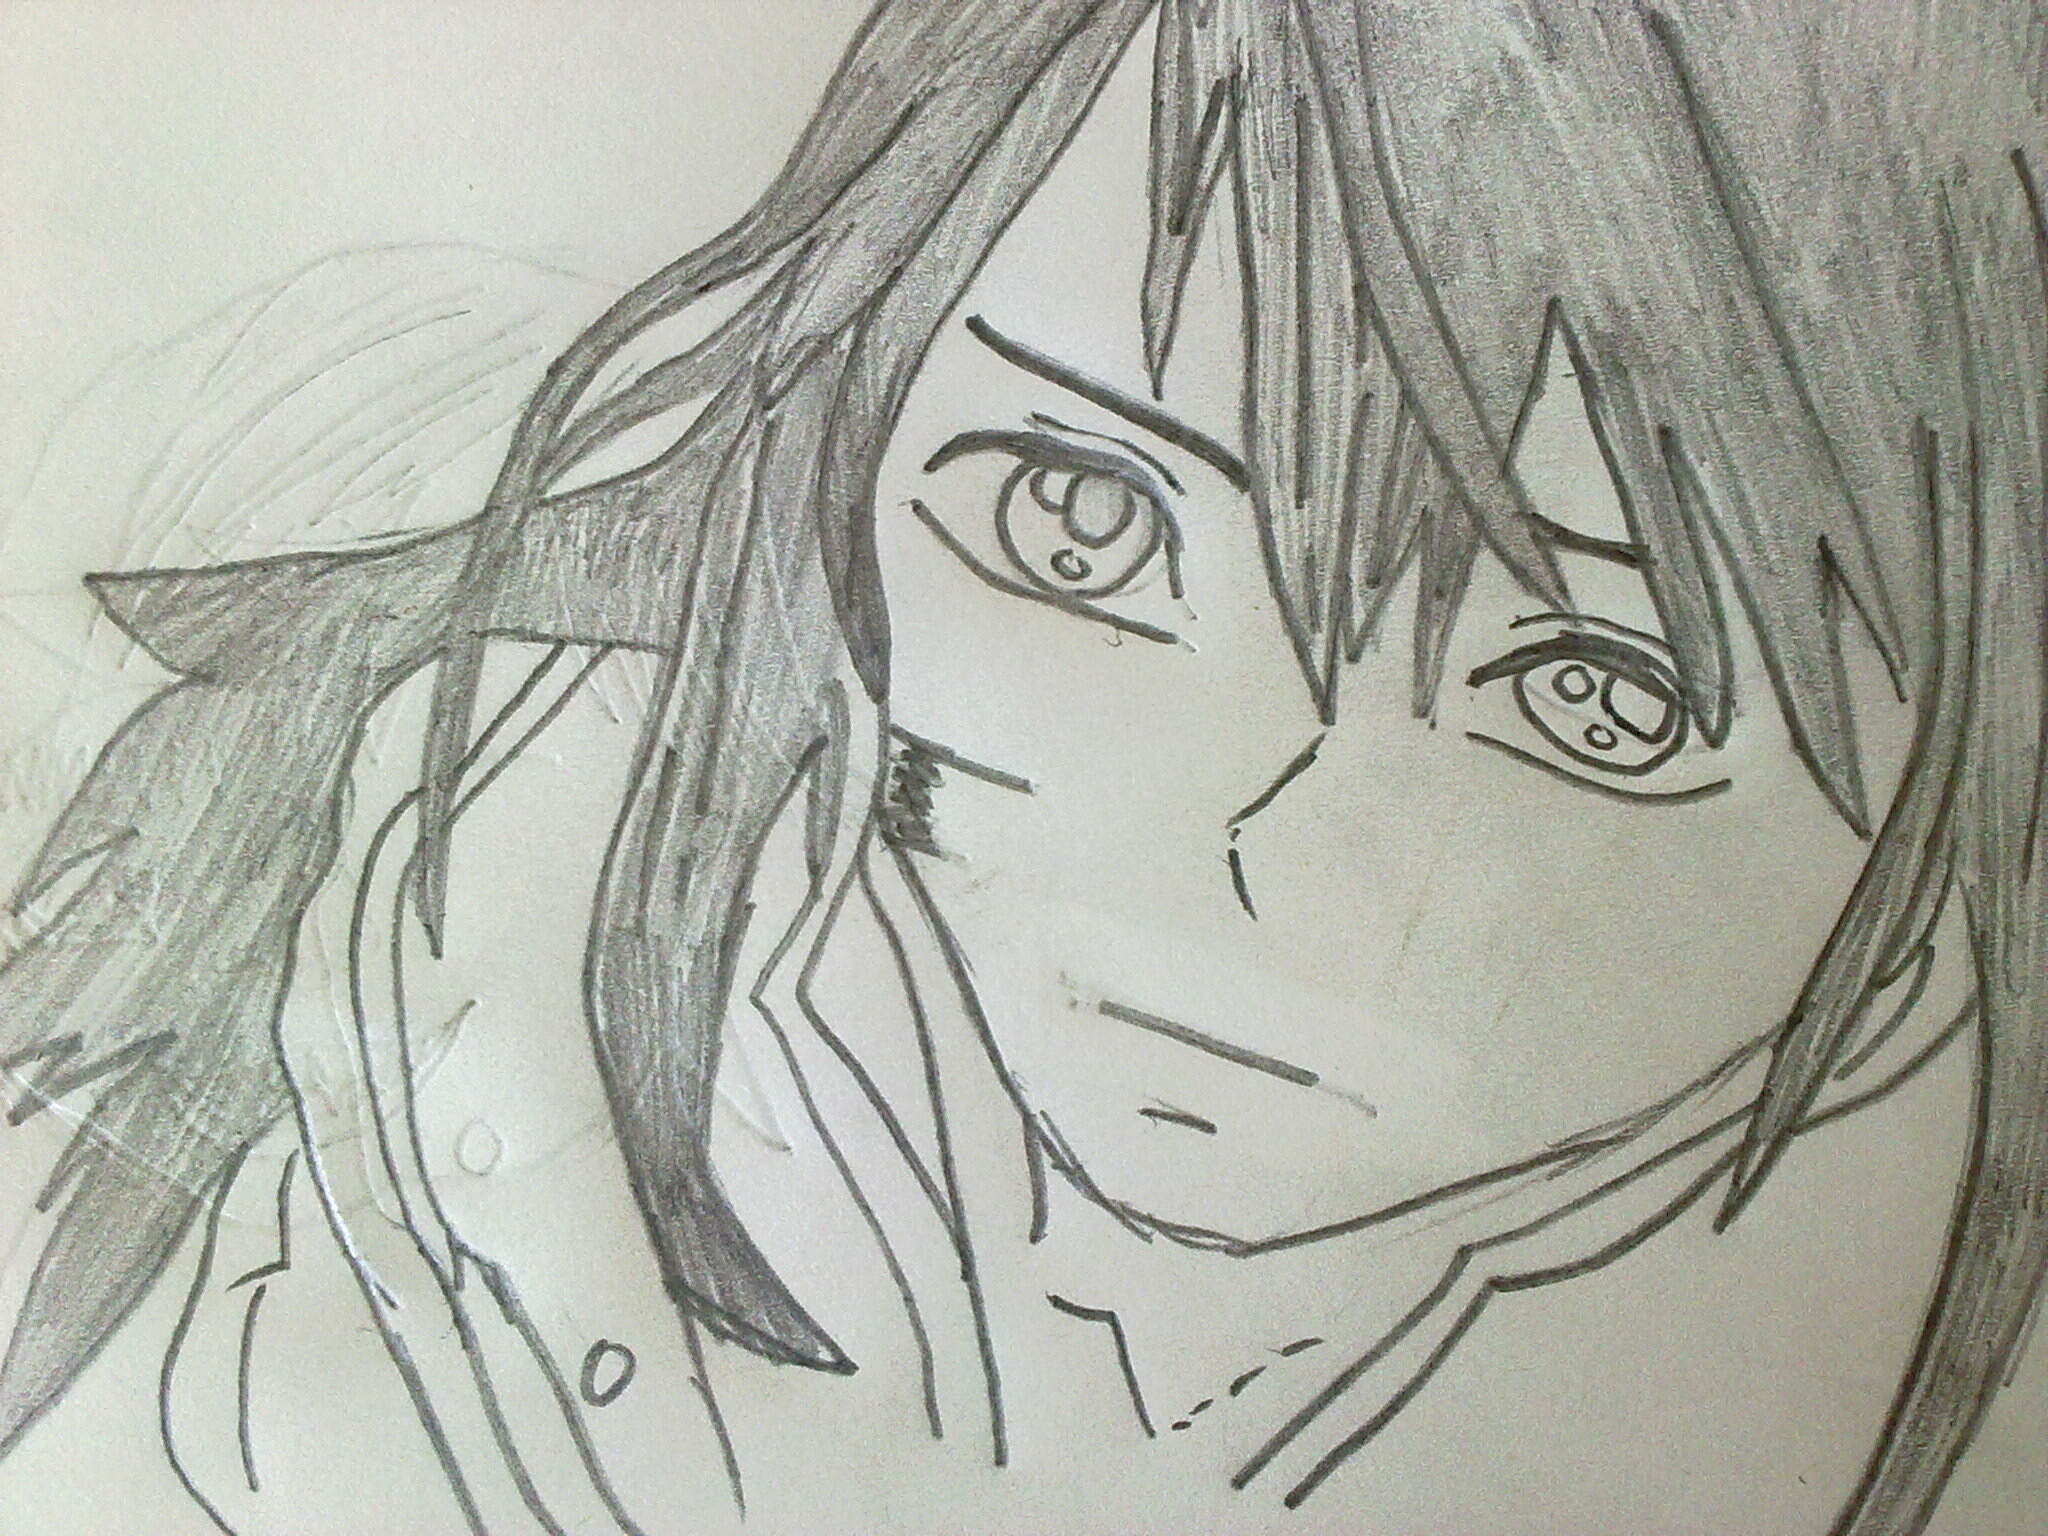 Anime Boy And Girl Drawings free image